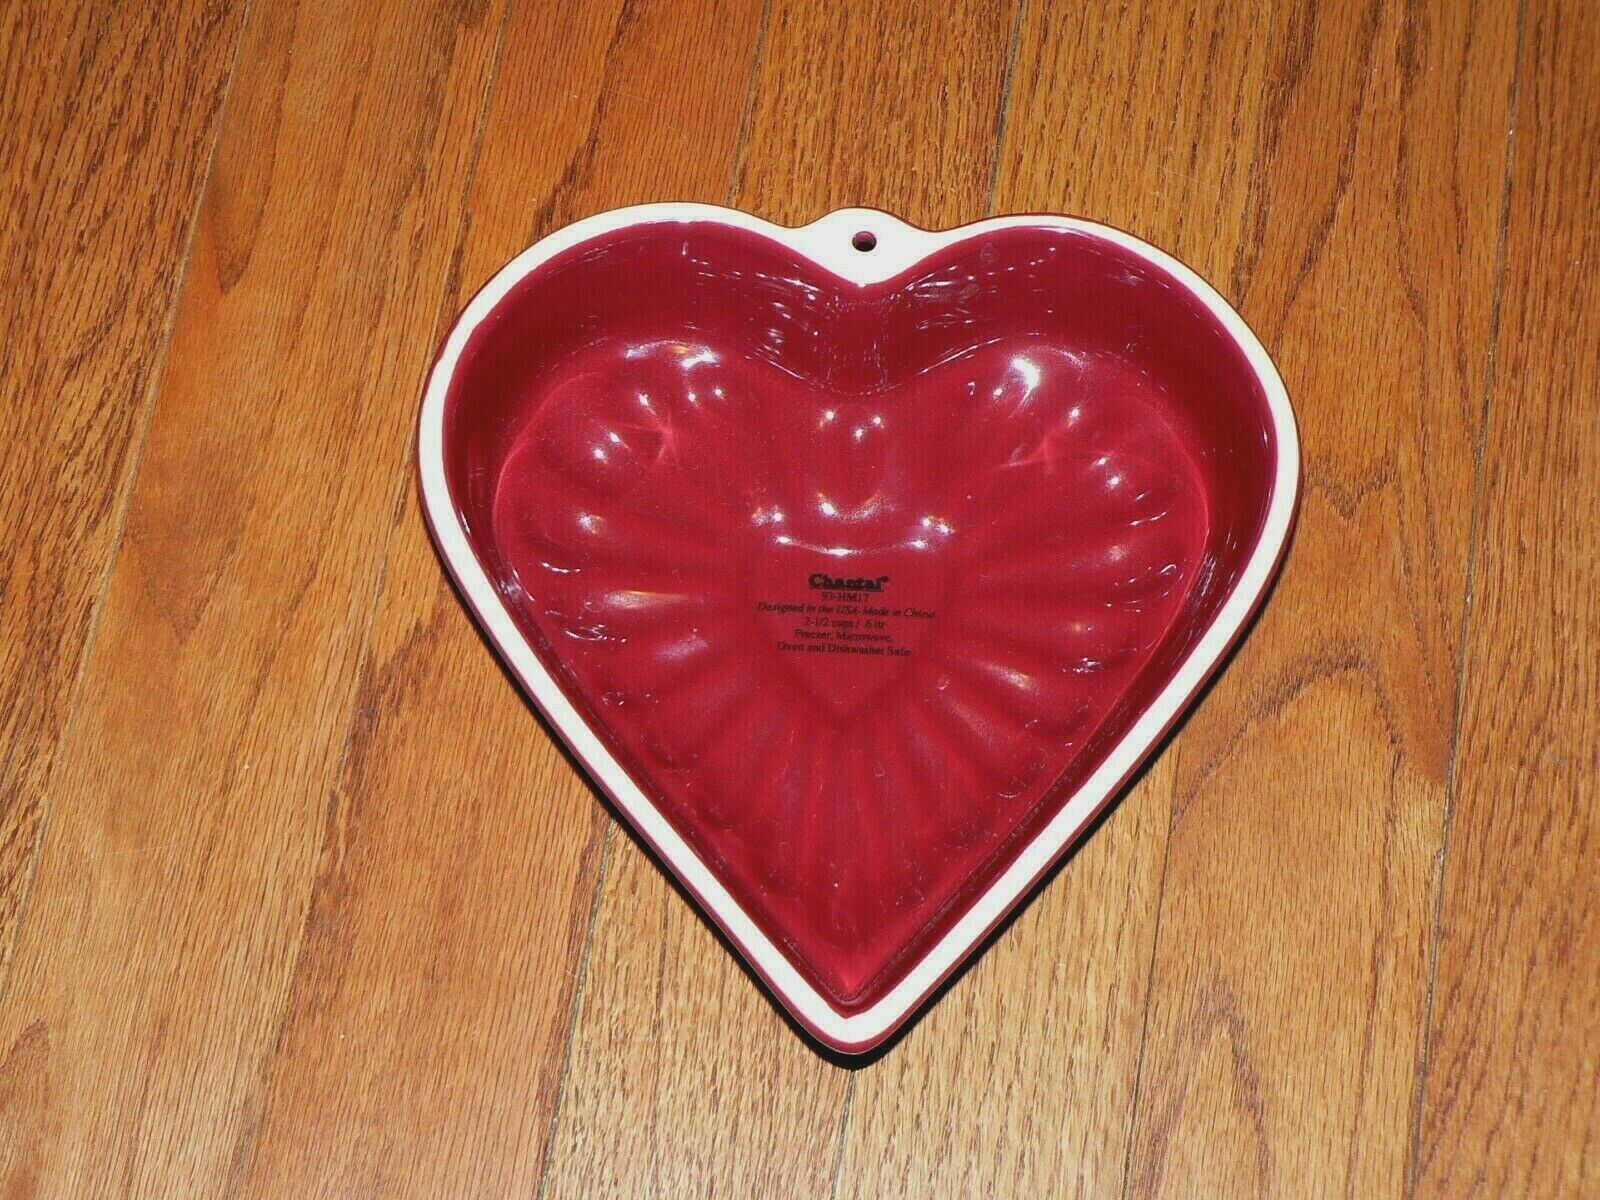 Chantal Ceramic Red Heart Shape # 93-hm17 Baking Casserole Dish 2 1/2 Cups, Ln